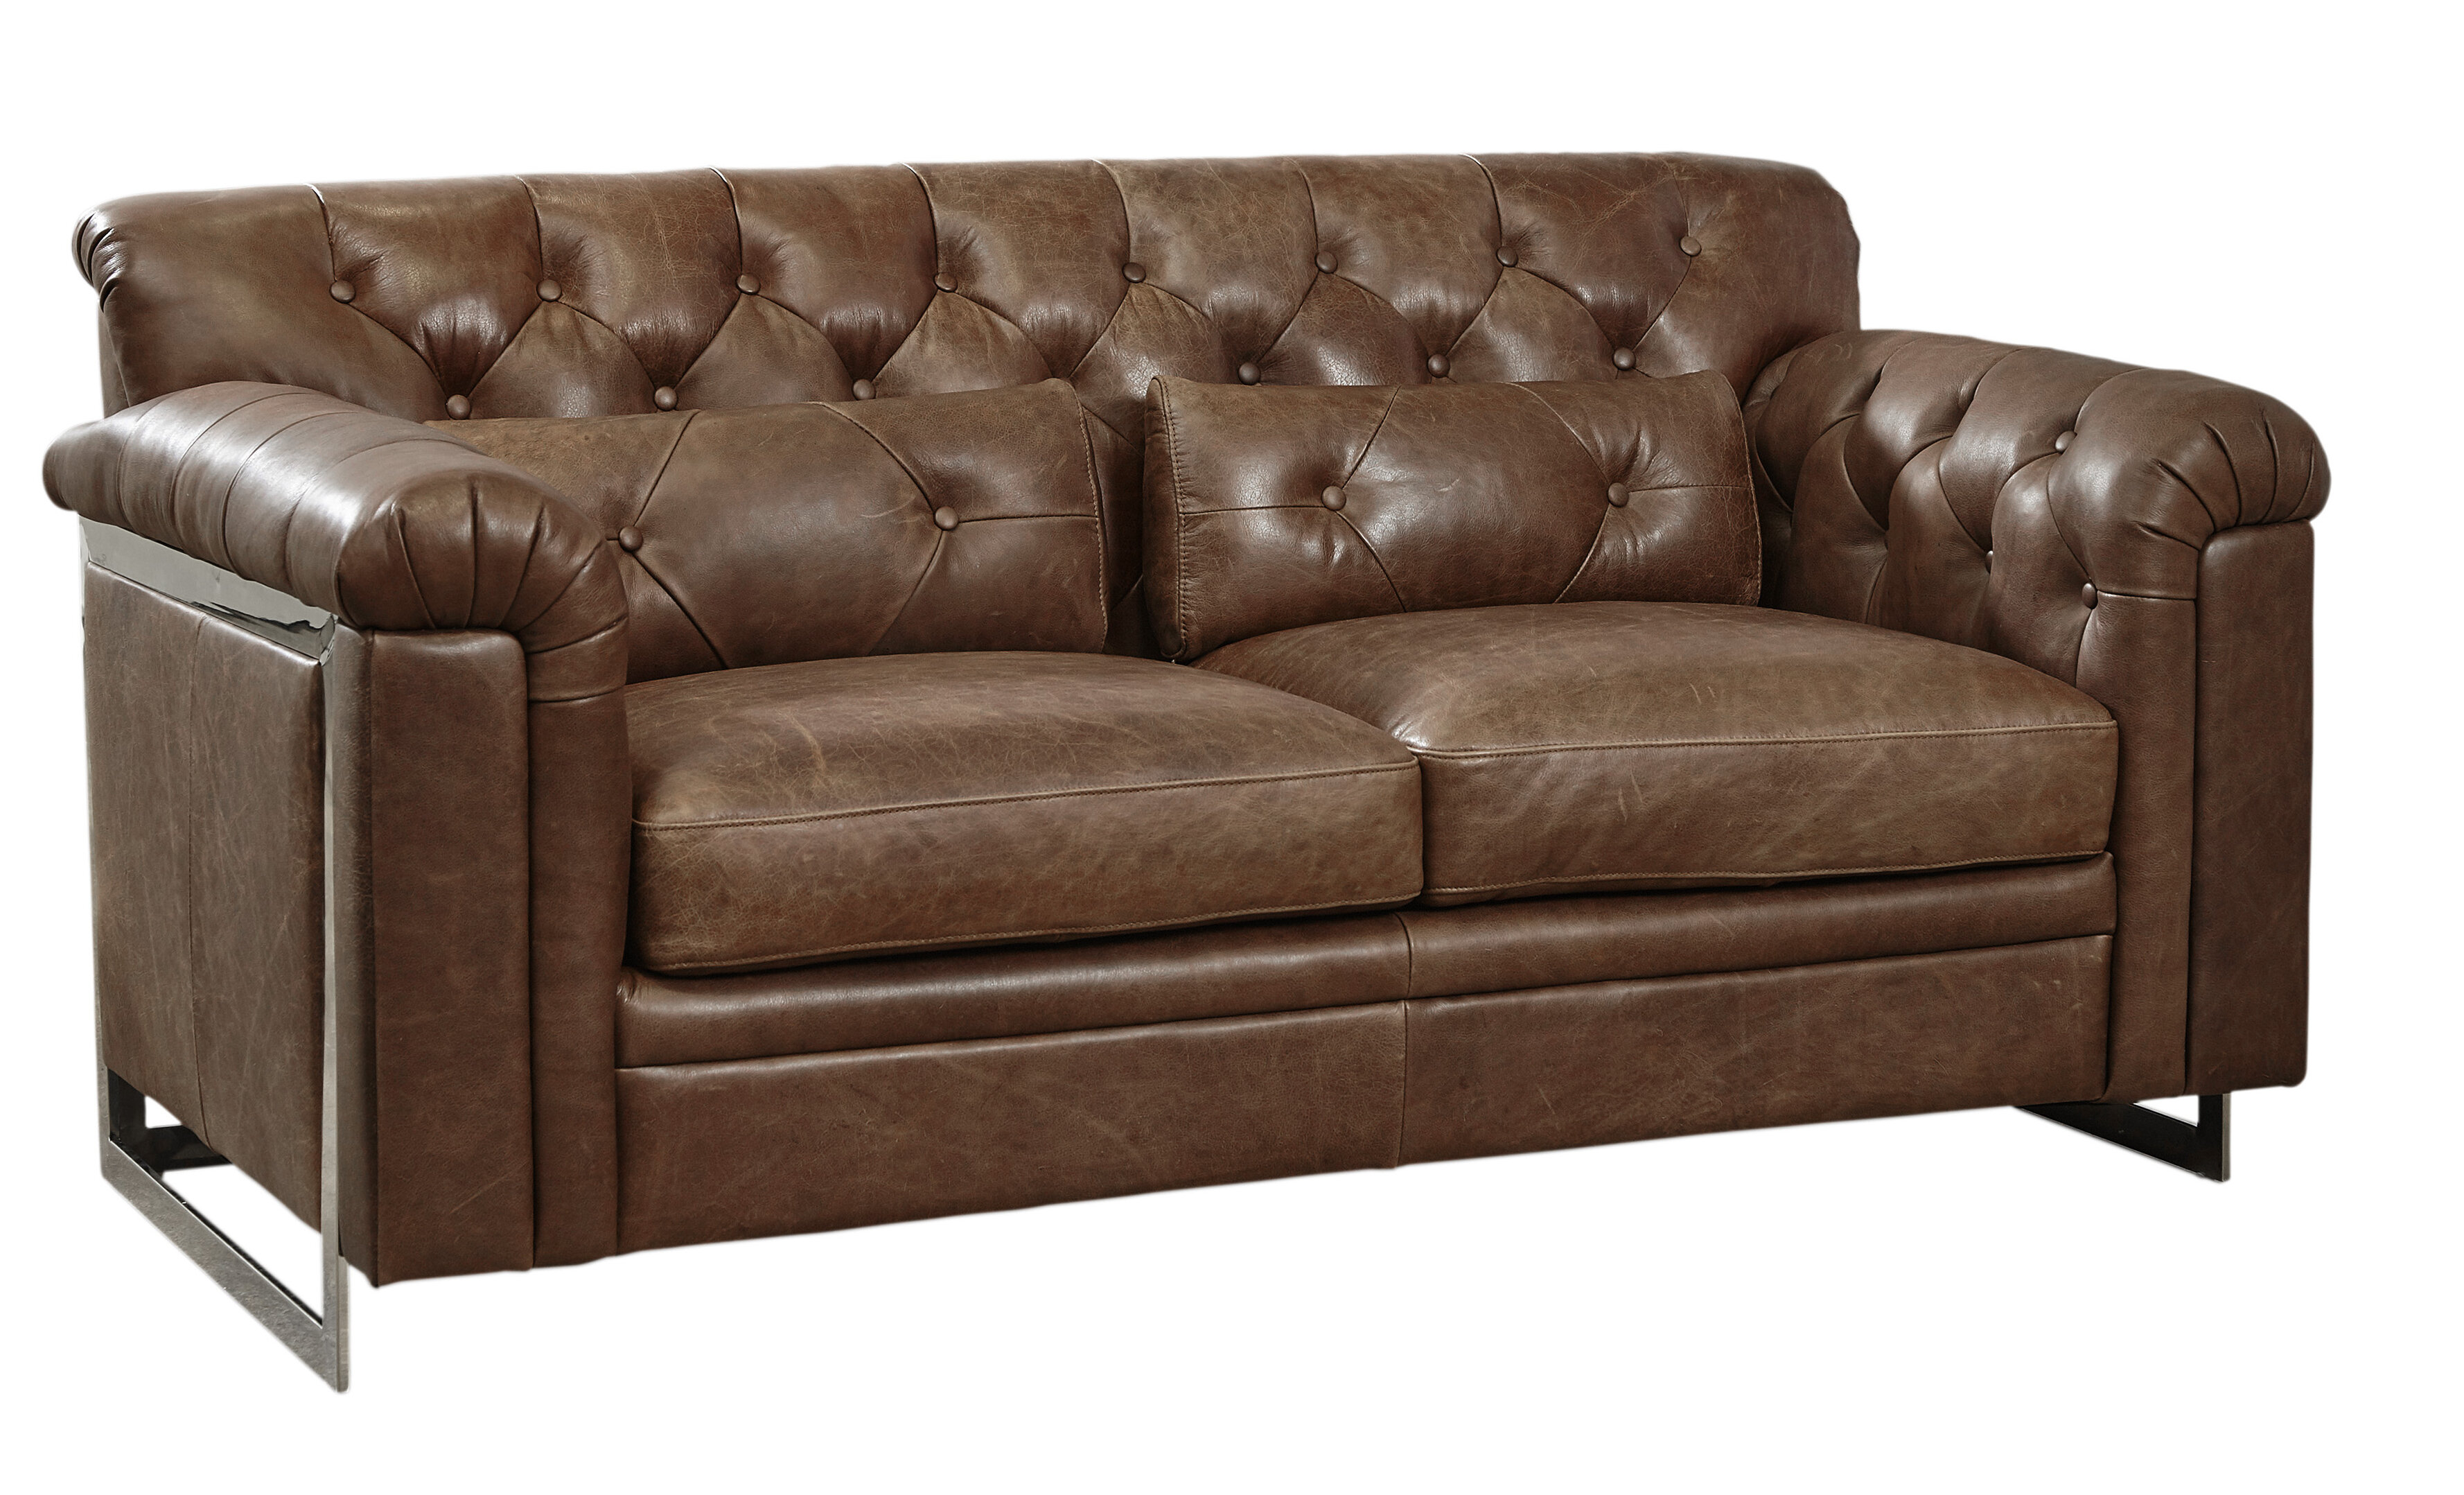 tufted leather loveseat sofa